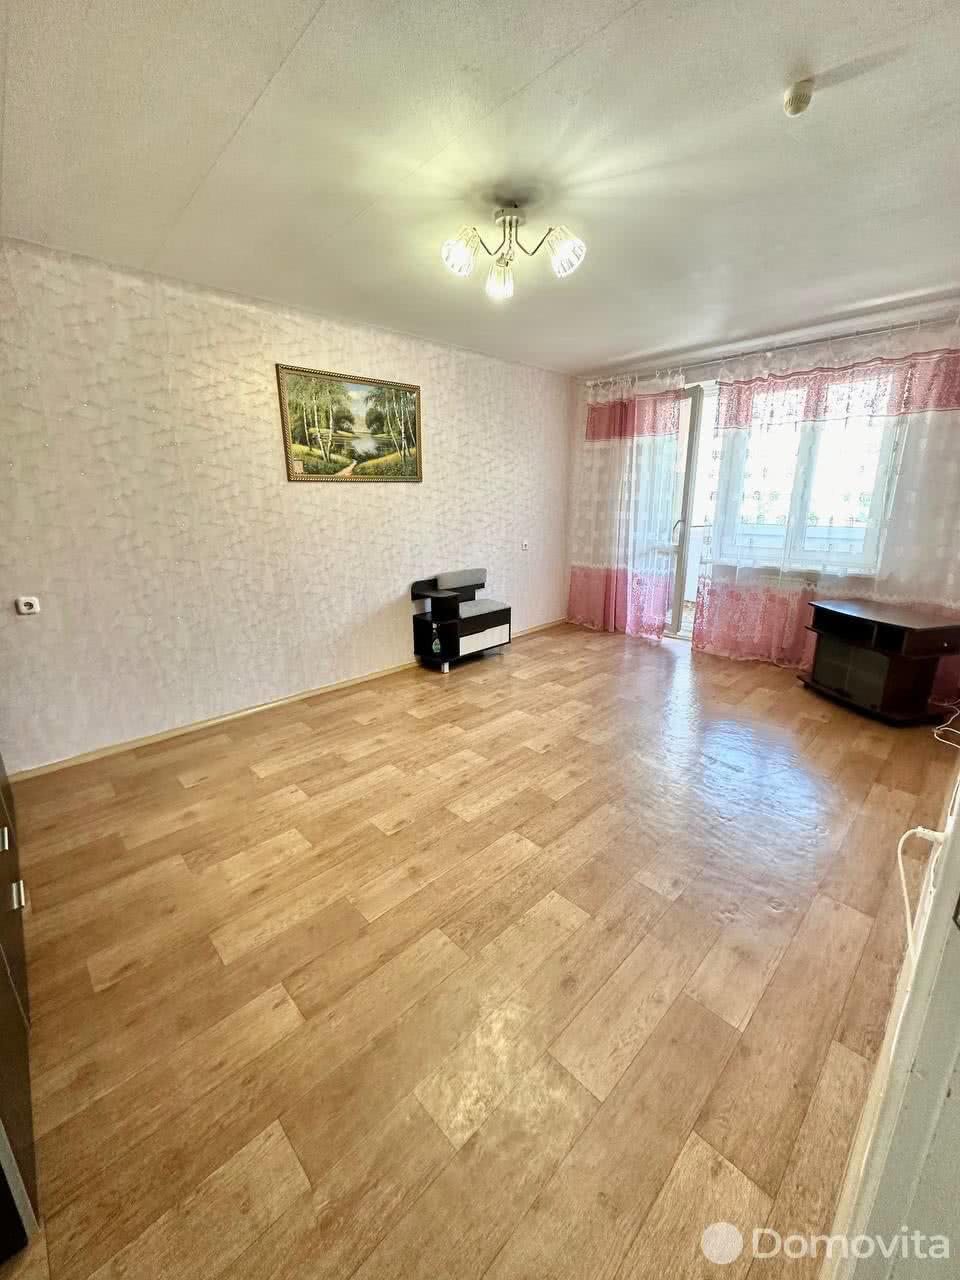 квартира, Минск, ул. Чичурина, д. 6, стоимость аренды 802 р./мес.